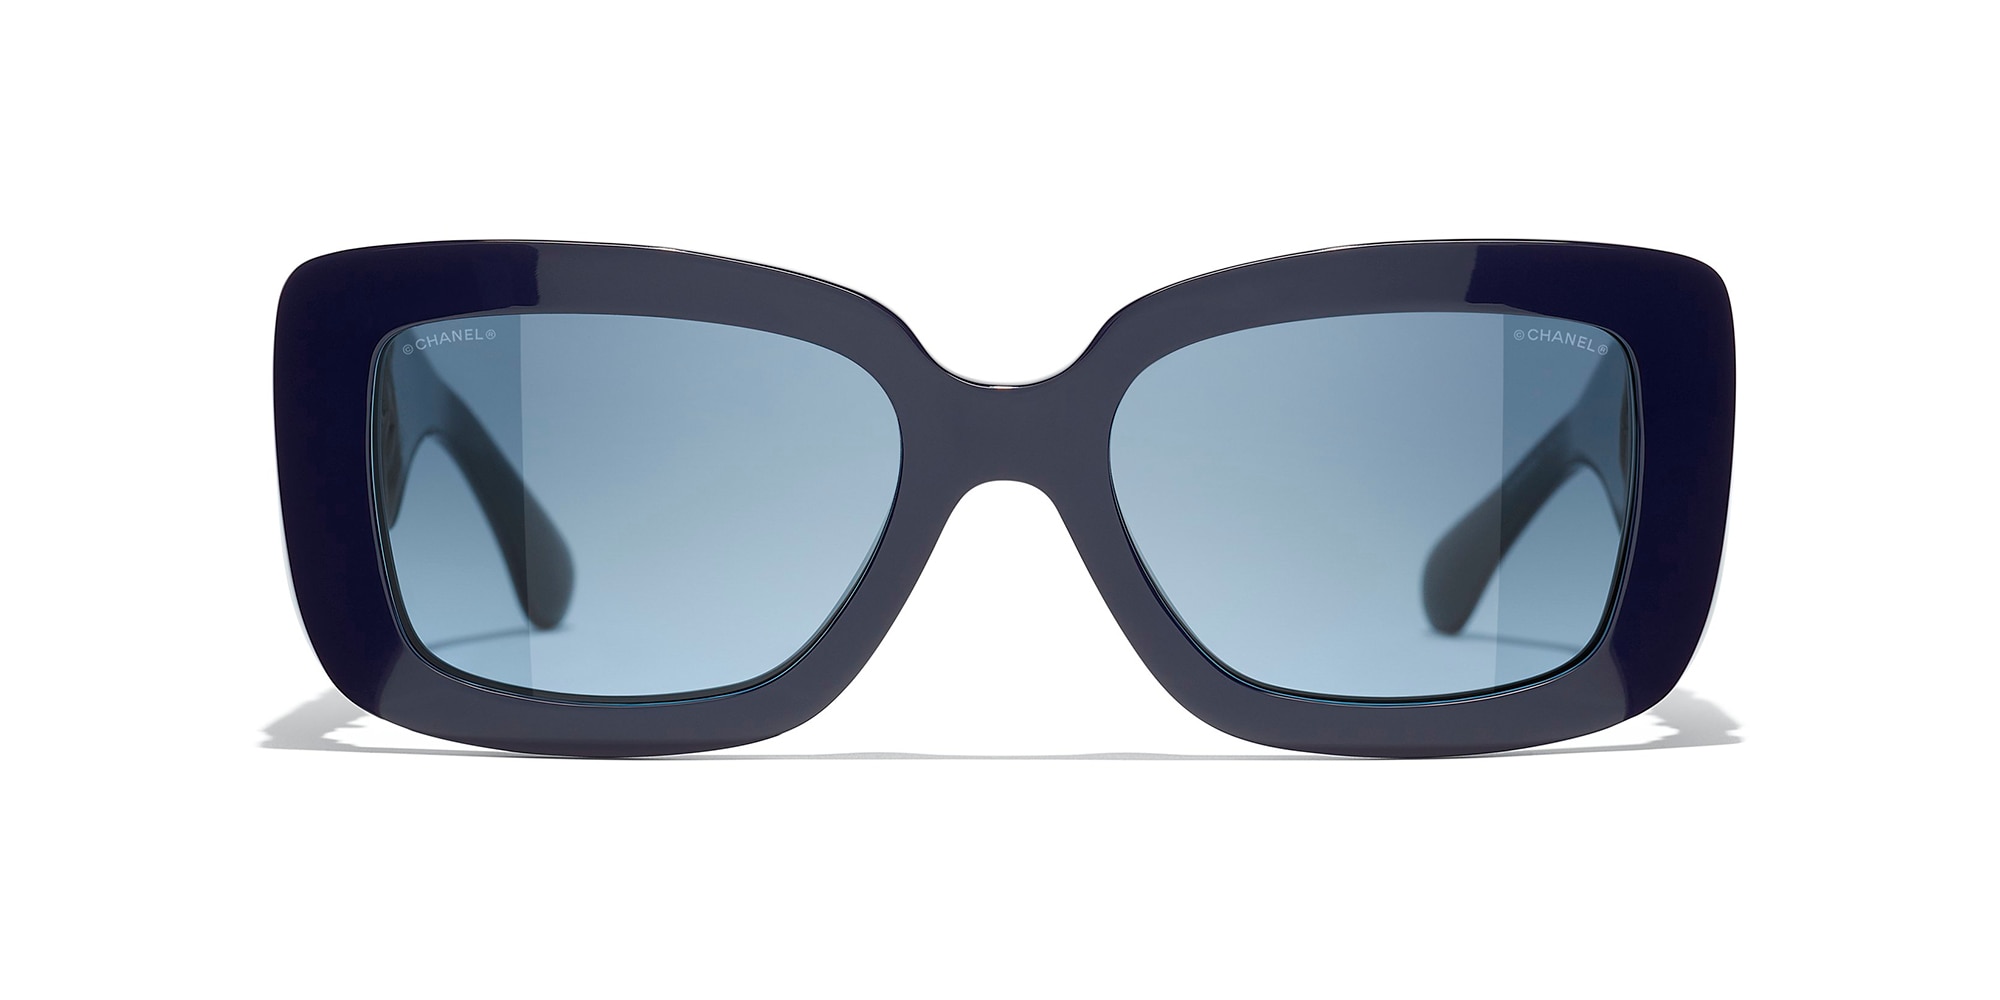 Chanel 5264 1445S2 Sunglasses Bright Blue amp Clear Blue Gradient Lens   eBay